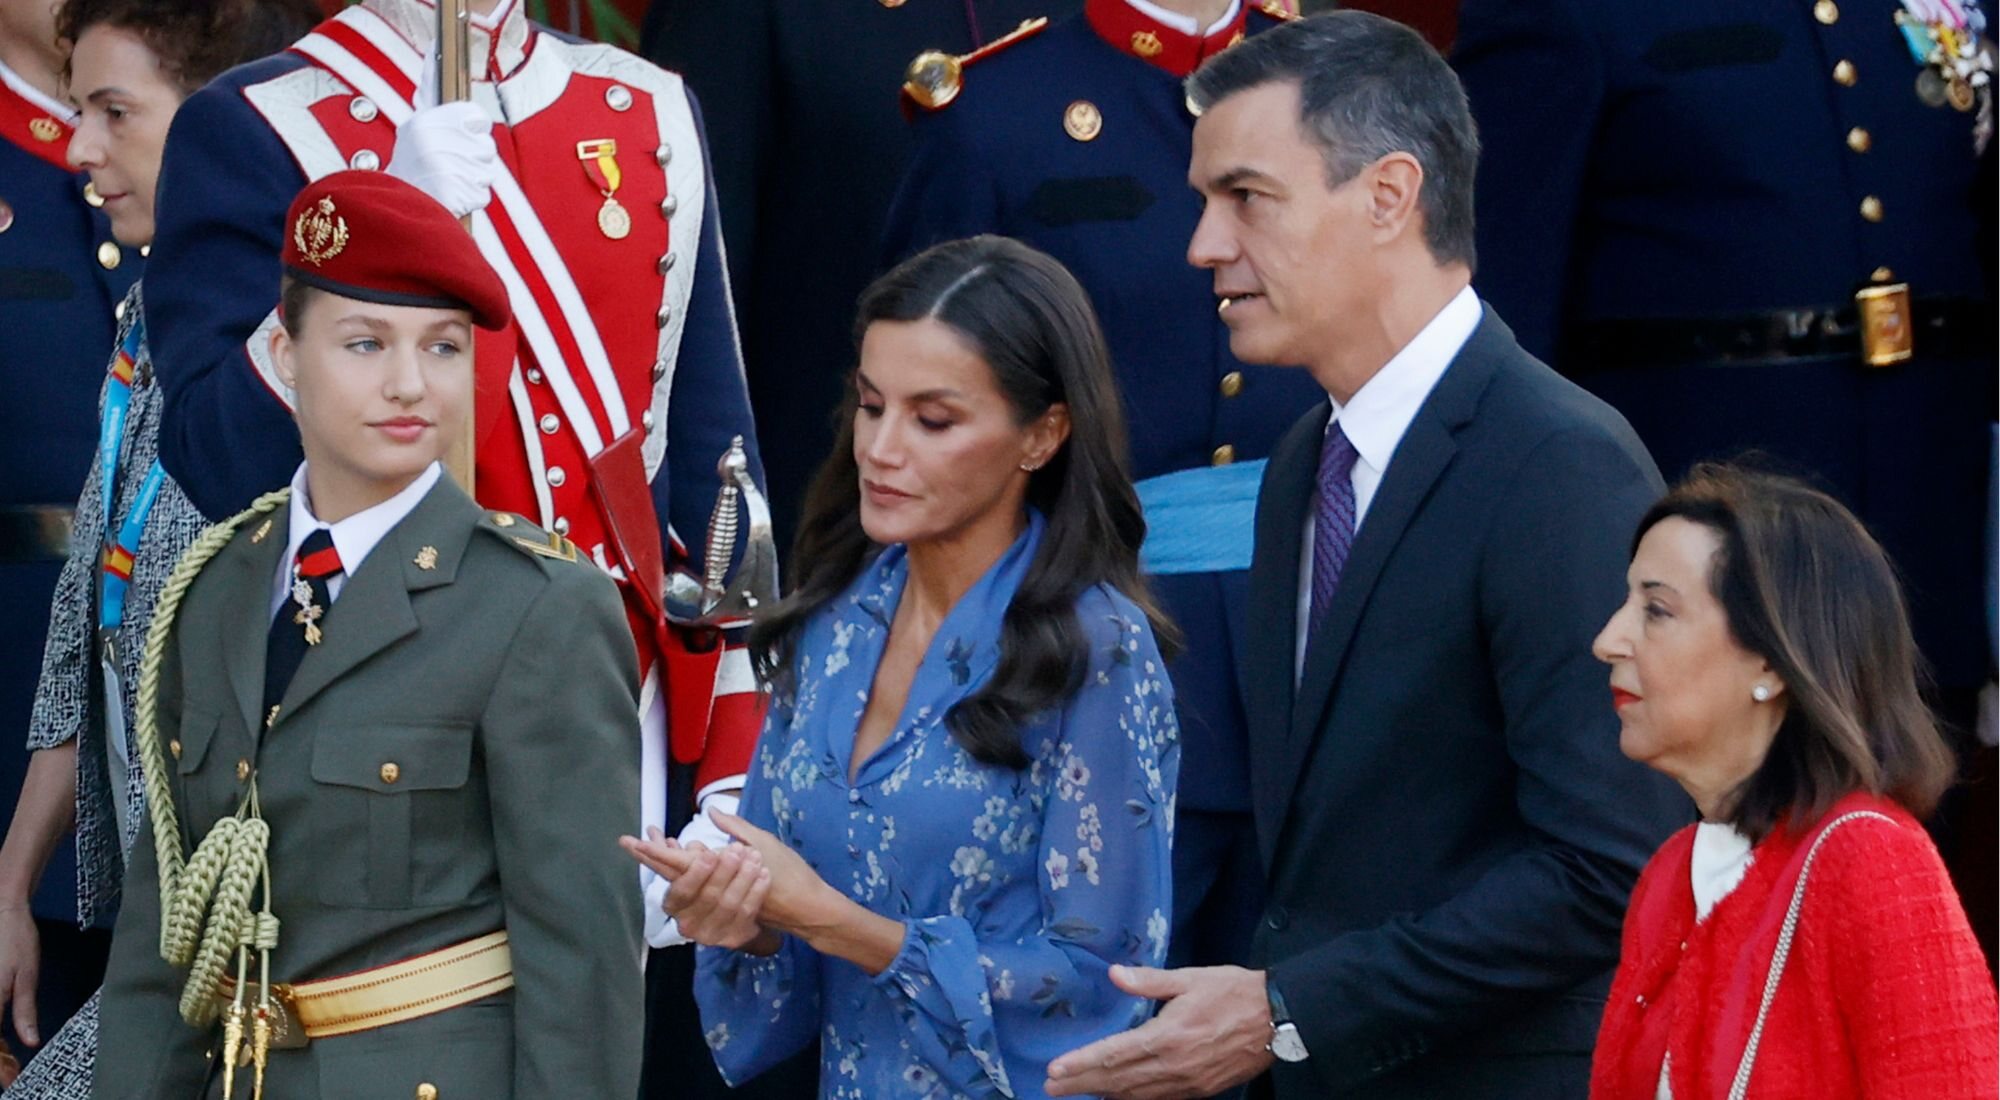 La princesa Leonor, la reina Letizia Ortiz, Pedro Sánchez y Margarita Robles 